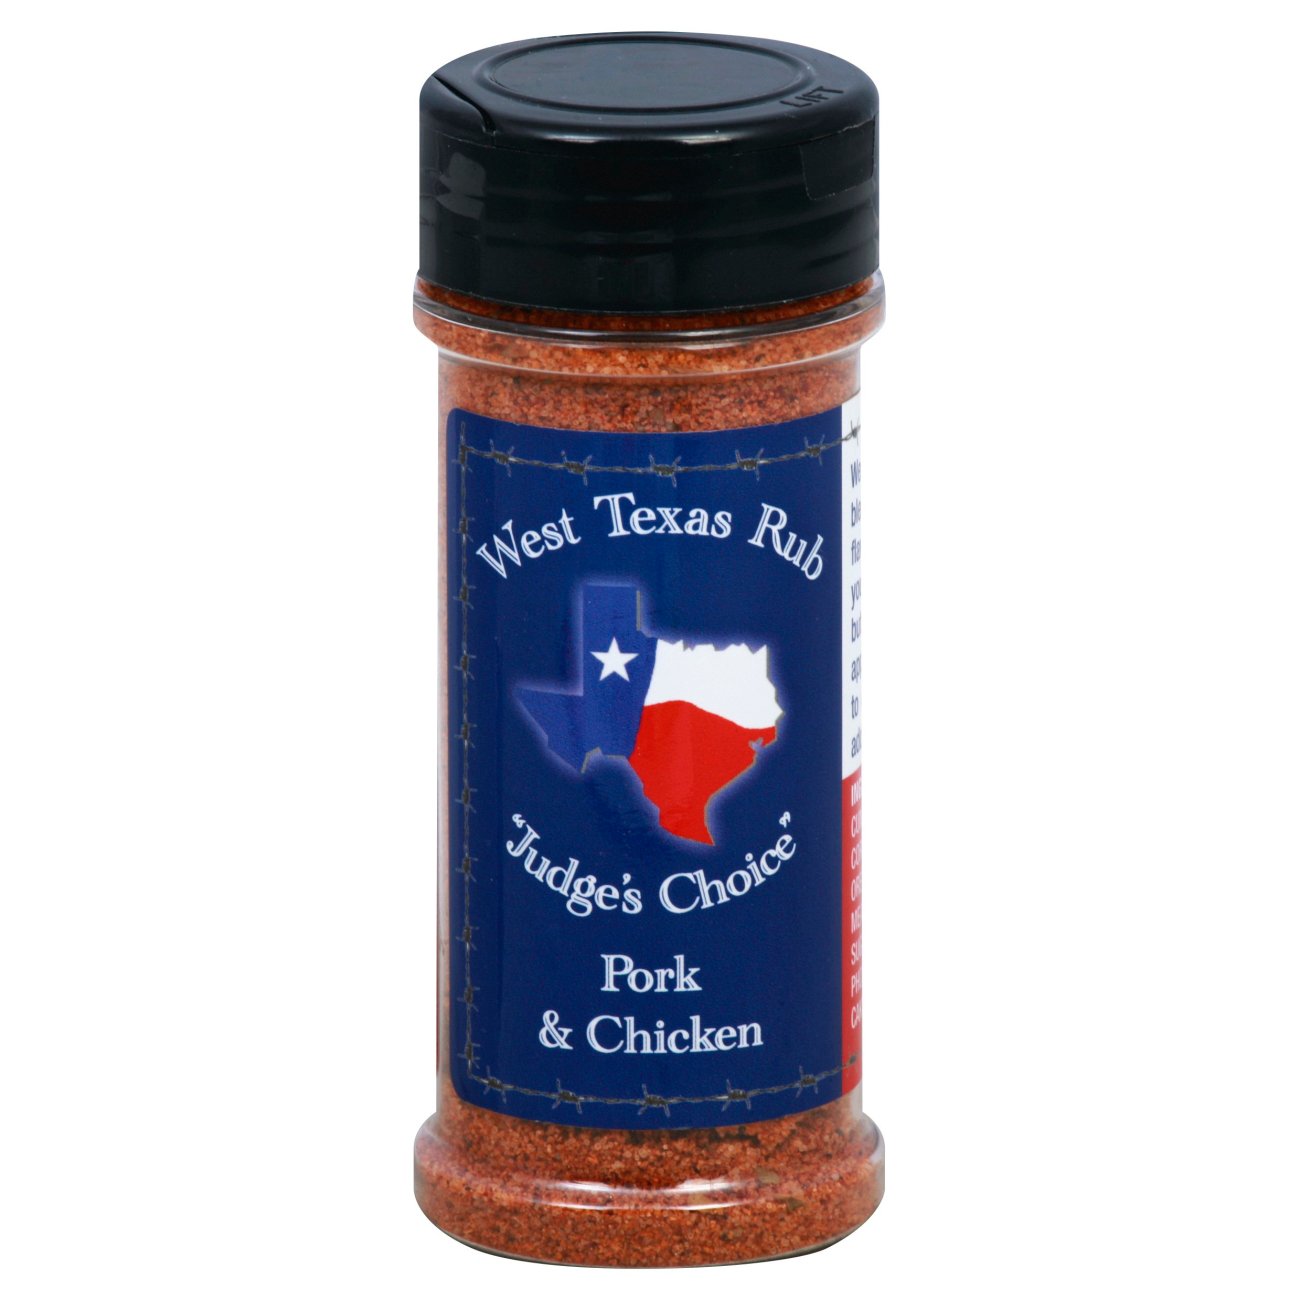 West Texas Rub Judge S Choice Pork Chicken Seasoning Shop Spice Mixes At H E B,Milk Shake Recipe